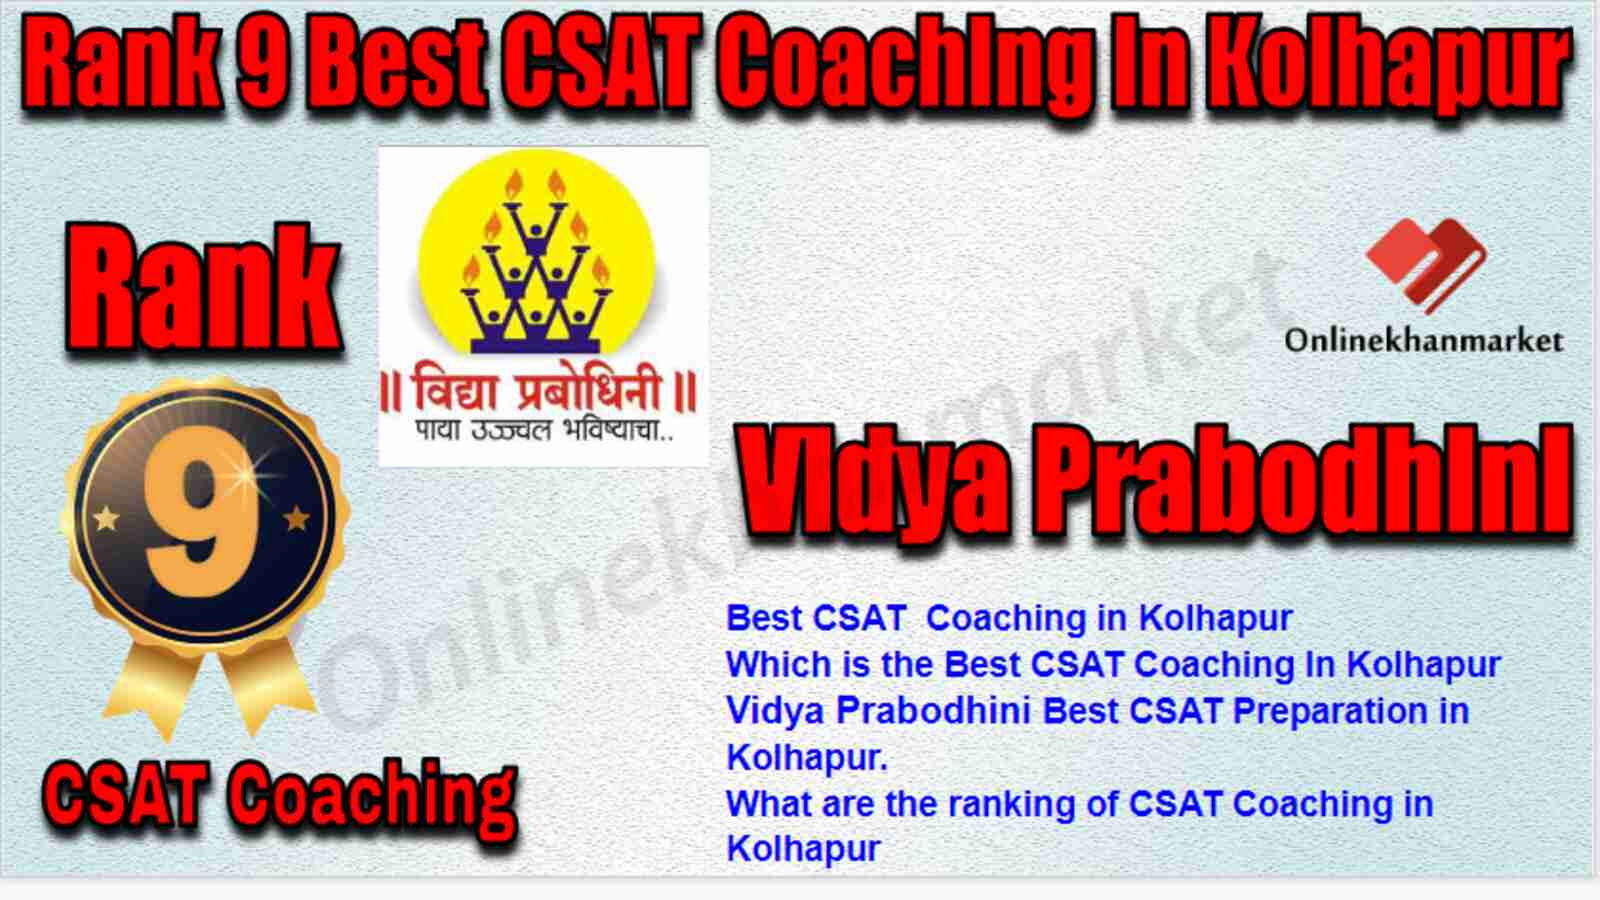 Rank 9 Best CSAT Coaching in Kolhapur